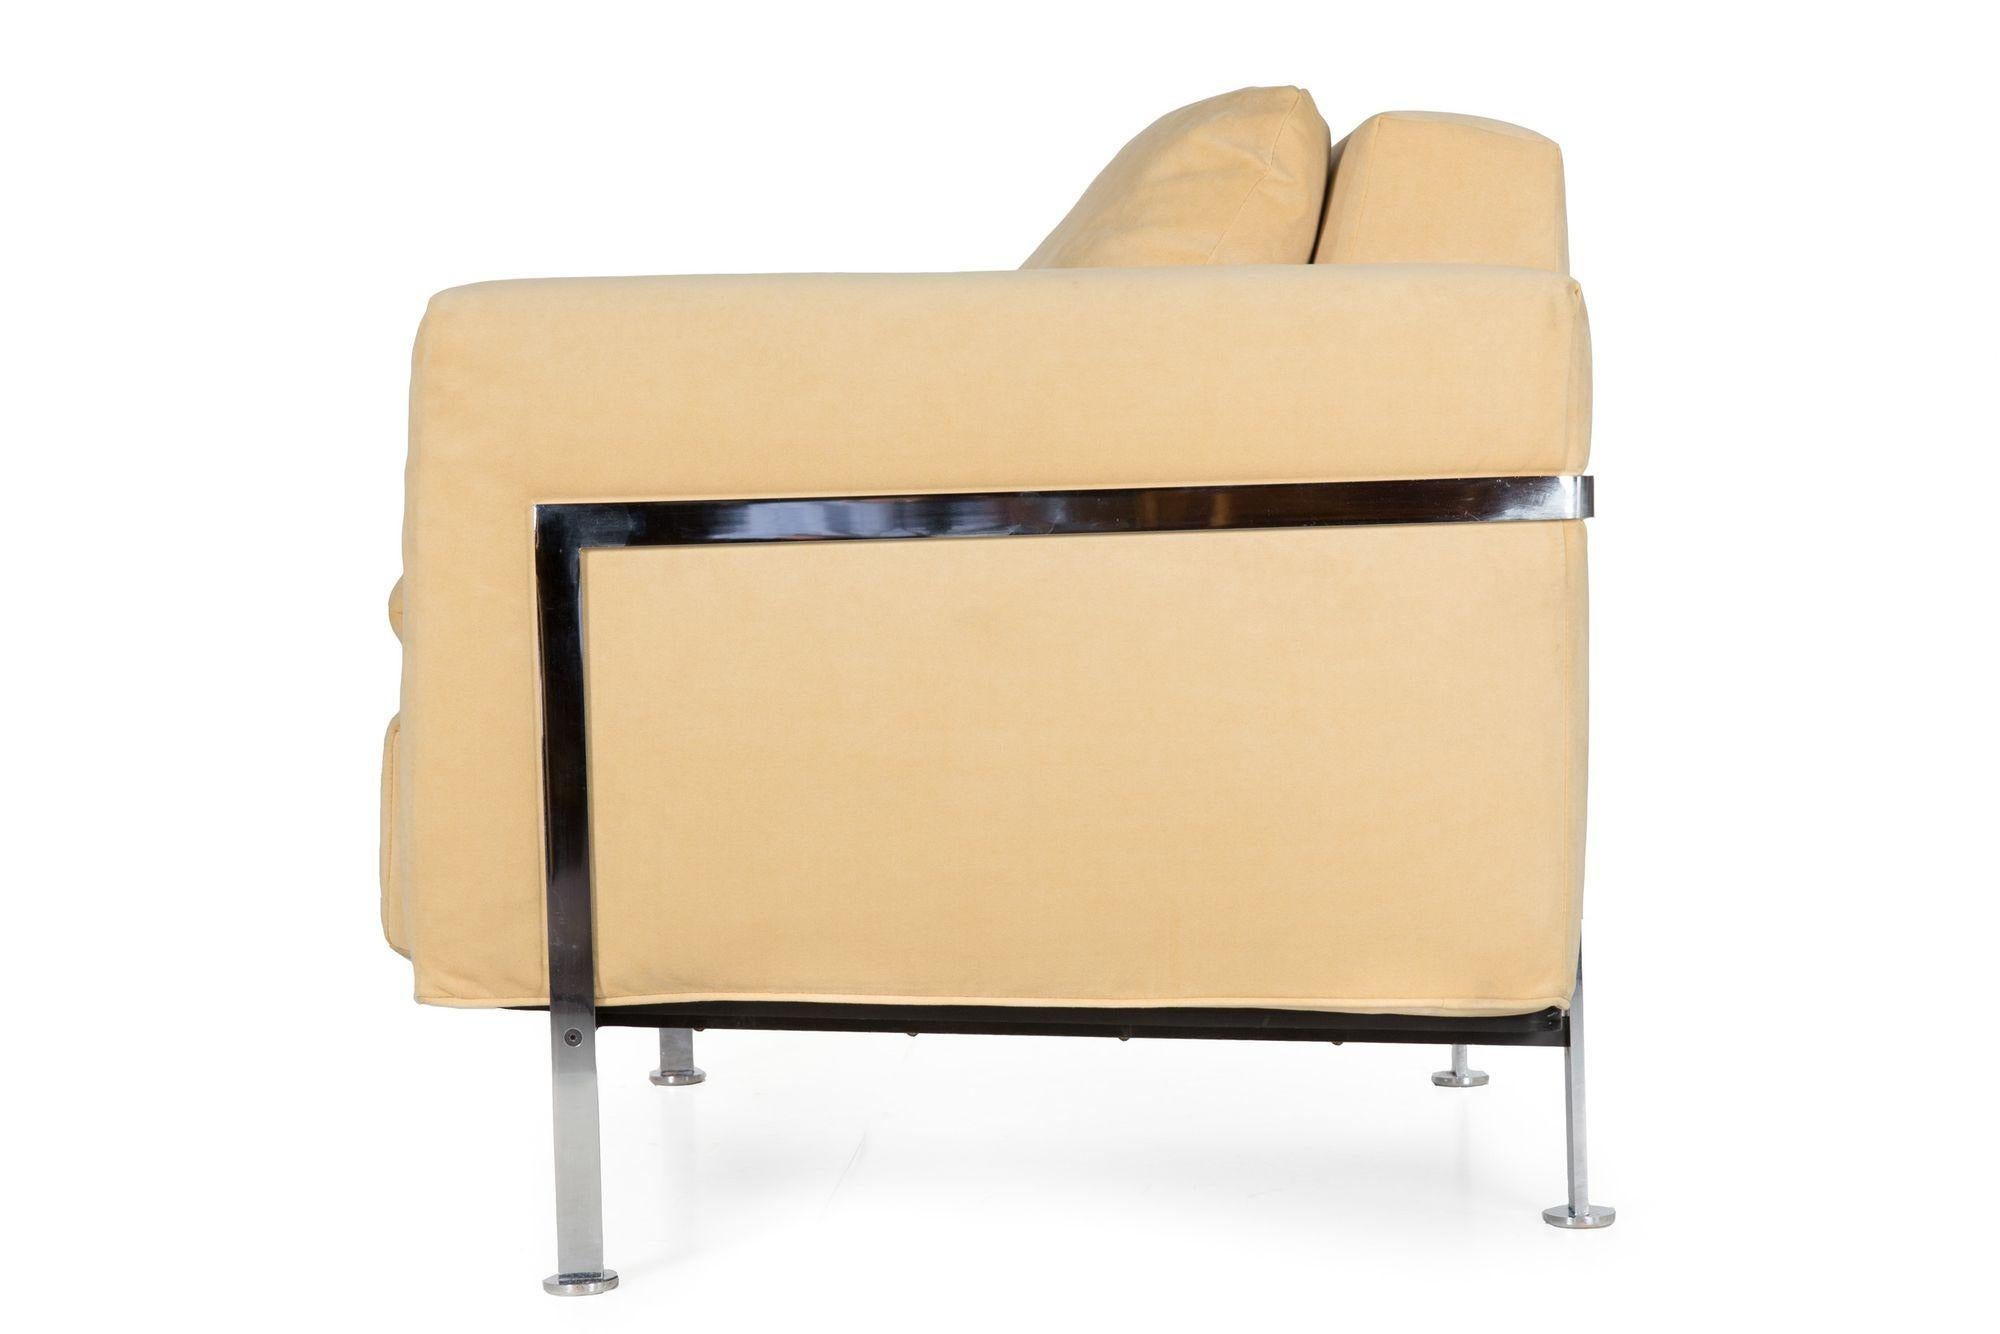 Circa 1970s Robert Haussmann “Model RH 302” Chrome Lounge Arm Chair In Good Condition For Sale In Shippensburg, PA